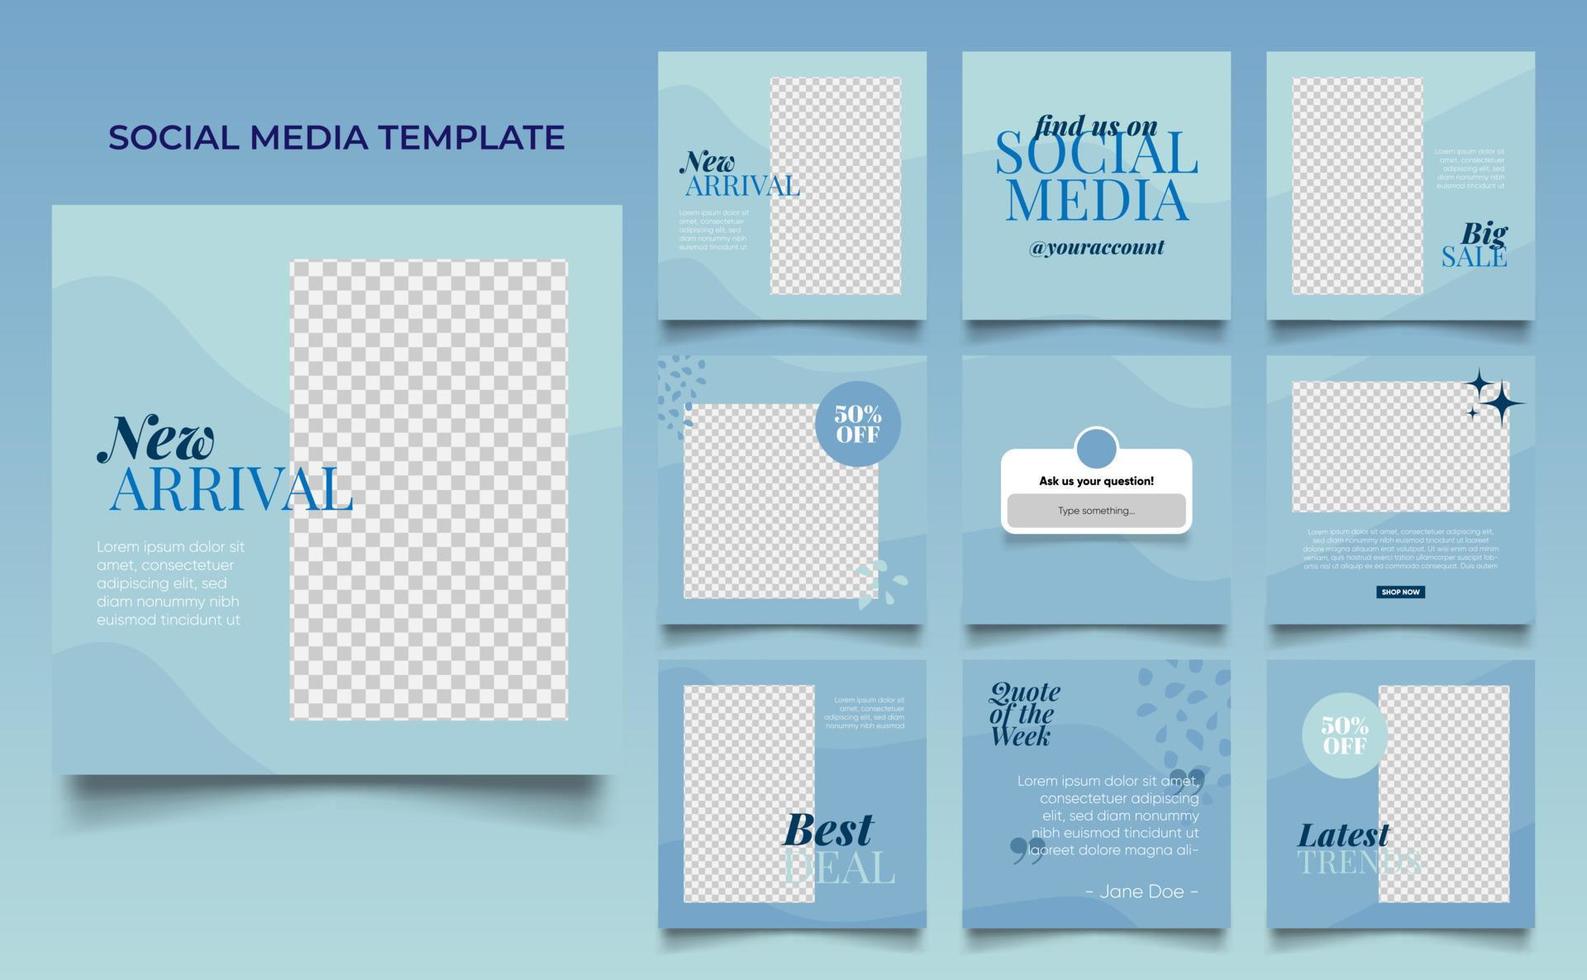 social media template banner modeverkaufsförderung in blaugrauer farbe vektor